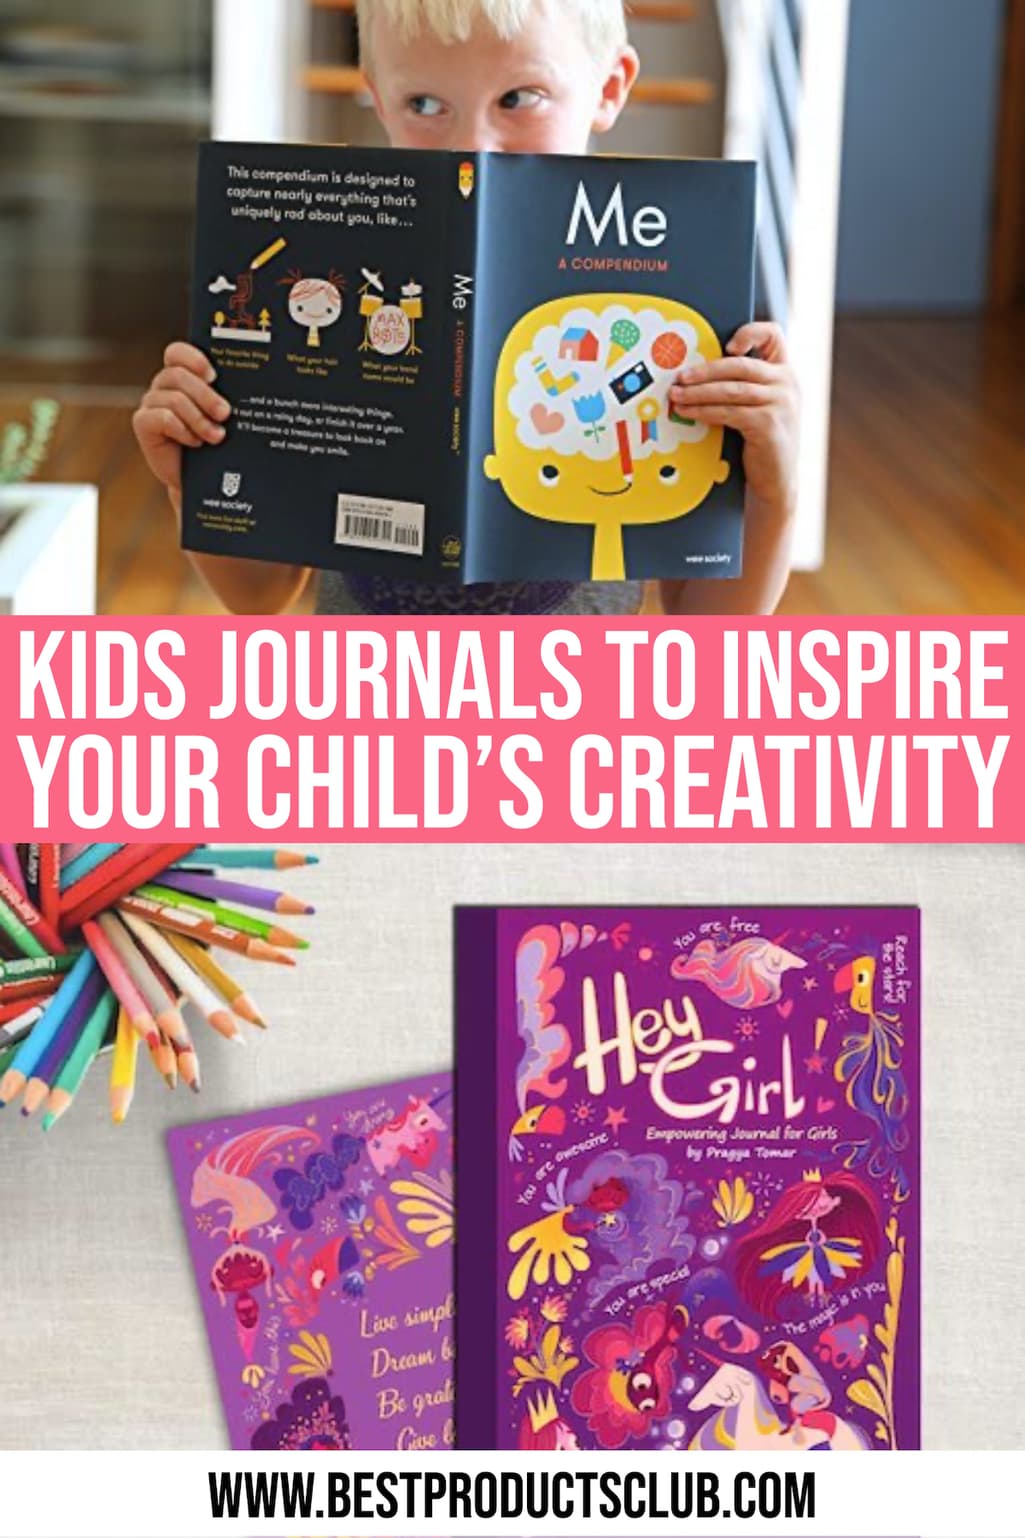 Top 25 Kids Journals To Inspire Your Child's Creativity